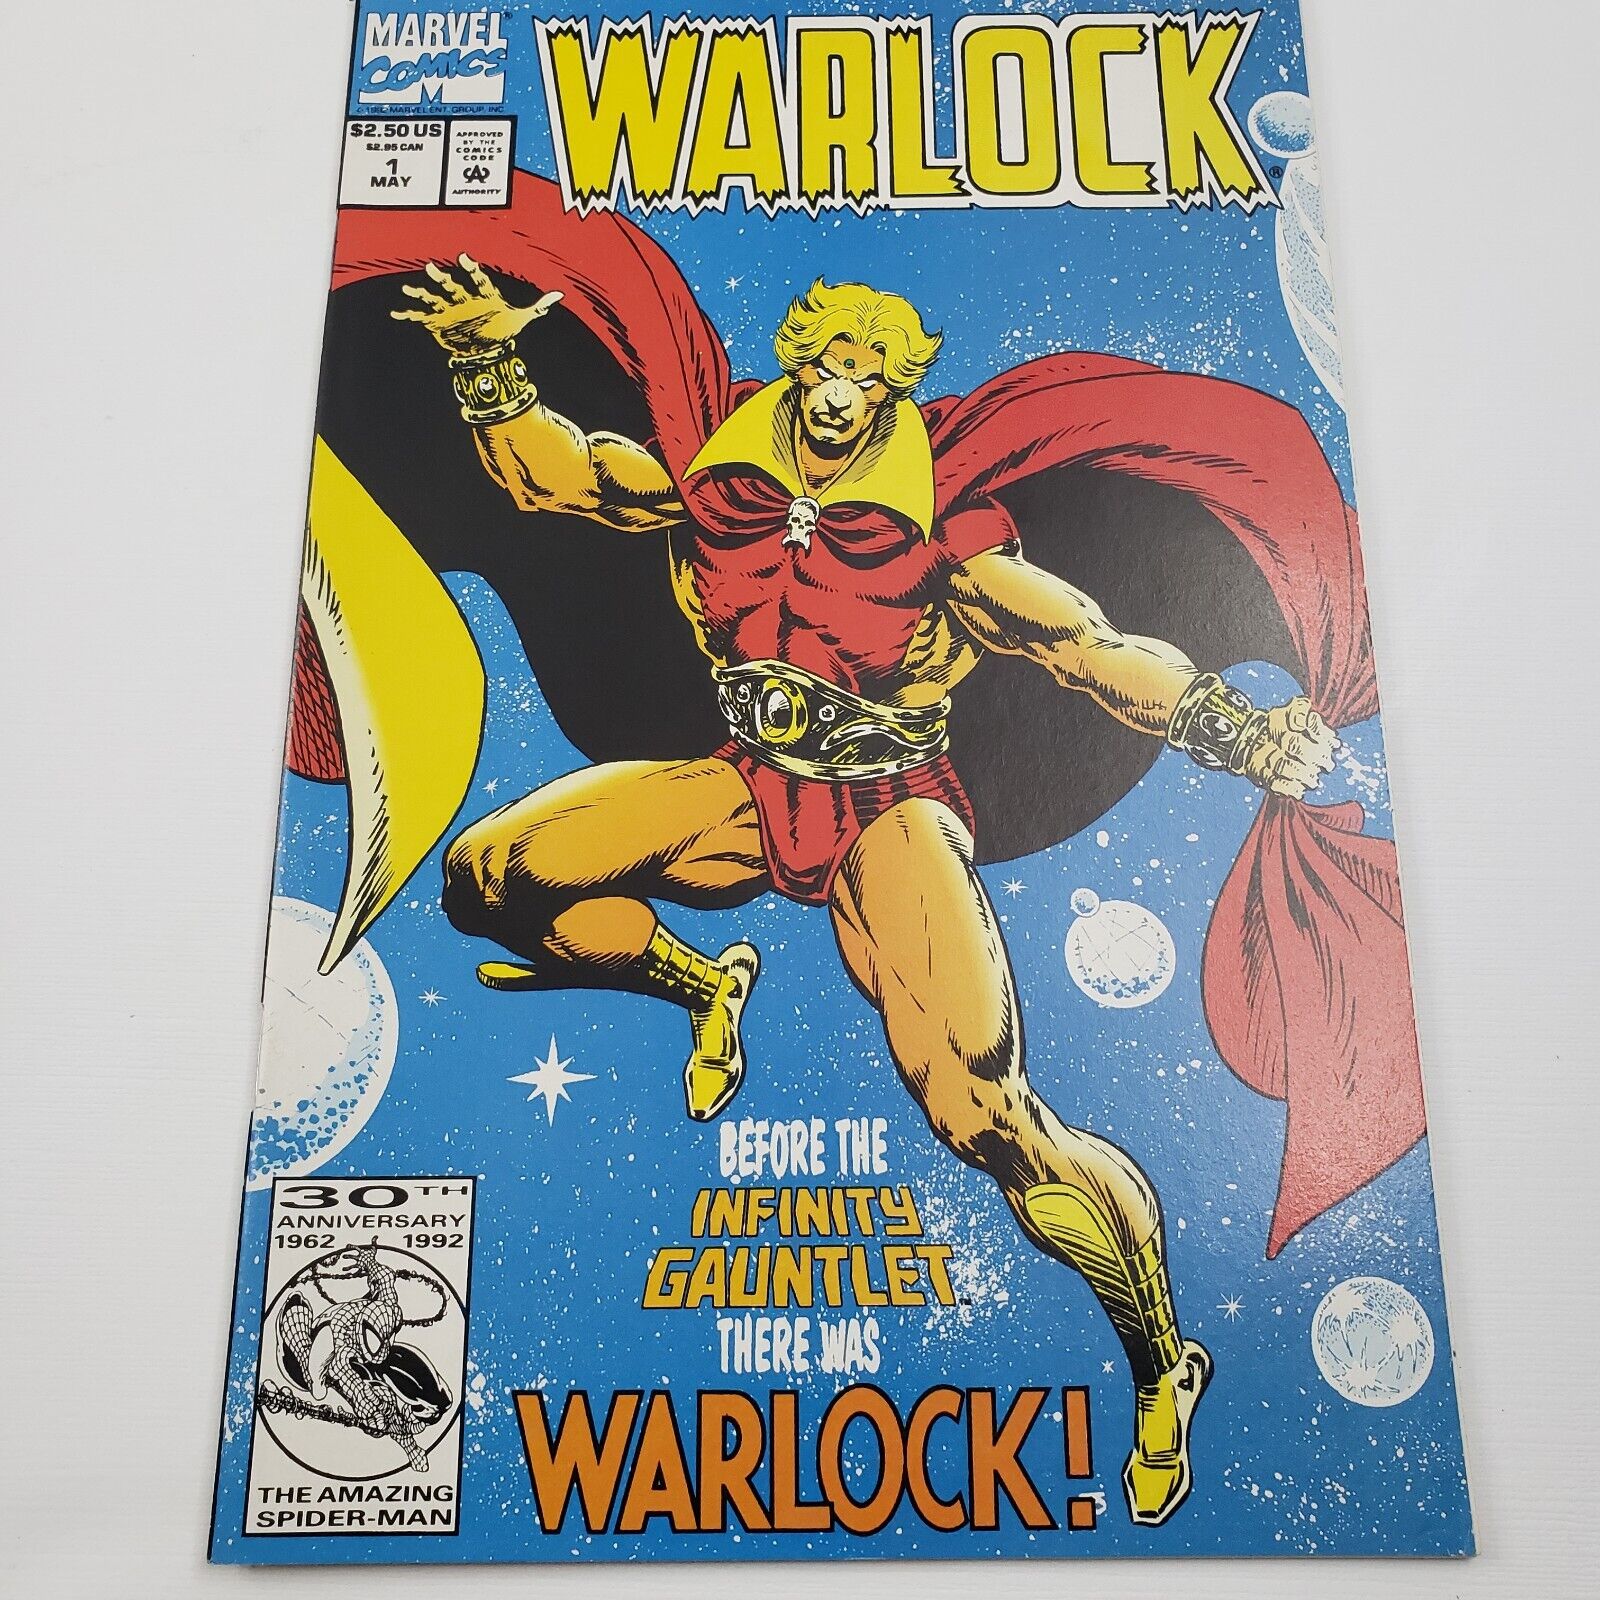 Marvel Comics - Warlock - Vol. 2,  #1 - May 1992